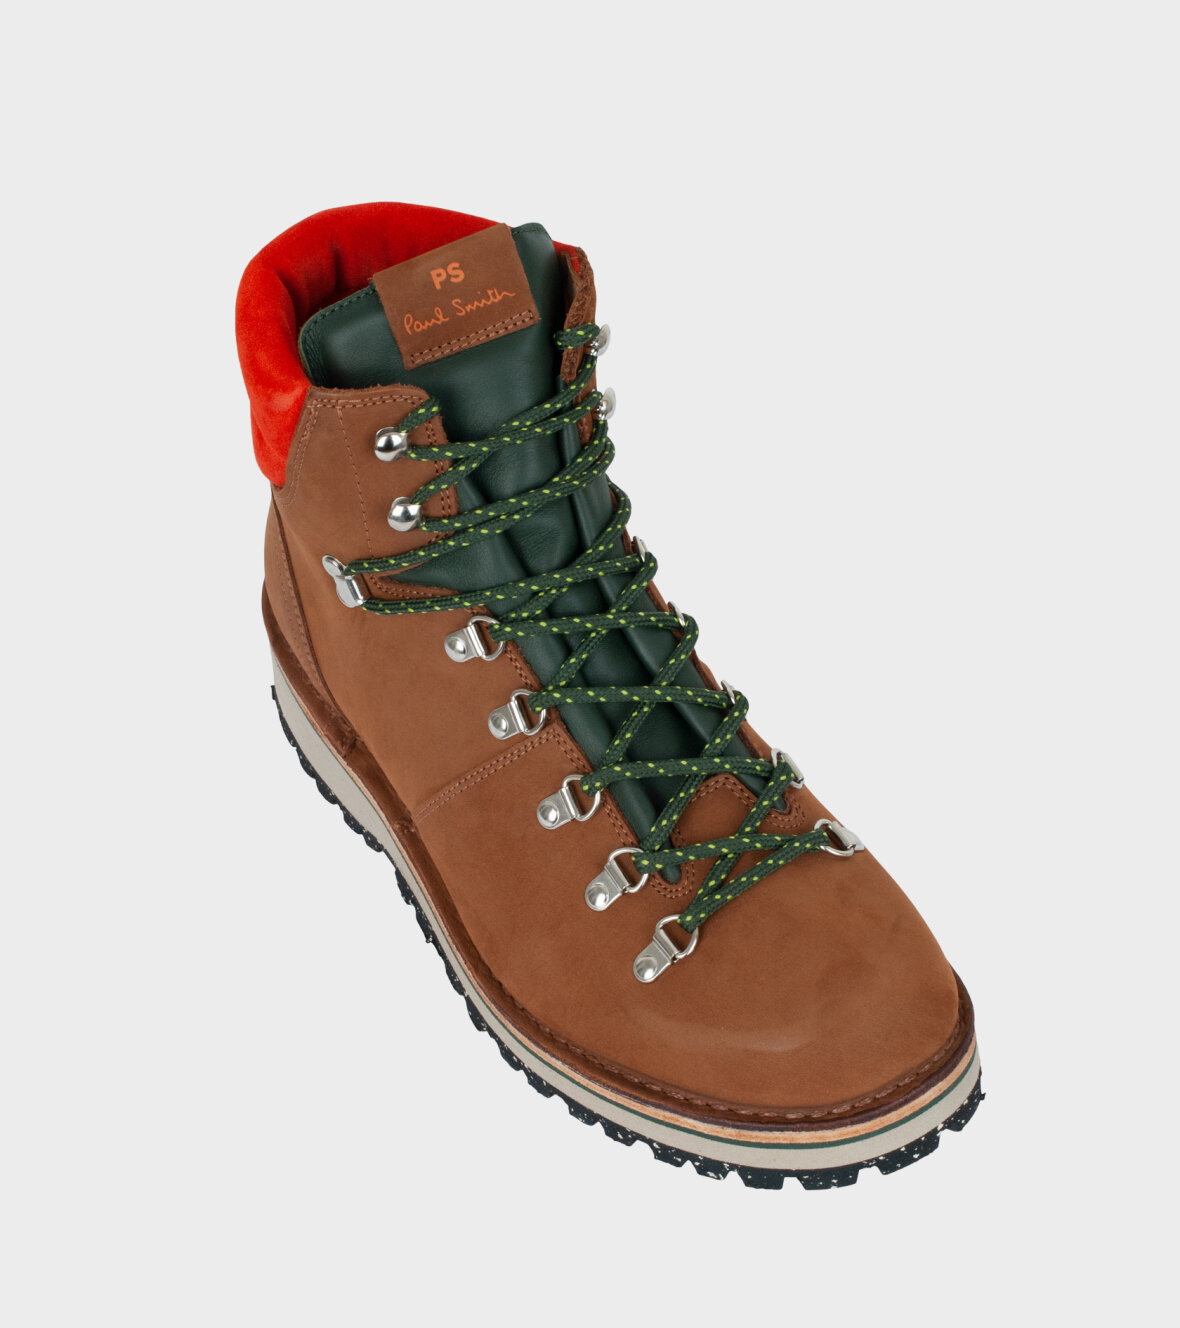 Bonus yderligere Vise dig dr. Adams - Shoes - Paul Smith - Ash Leather Boots Brown Tan